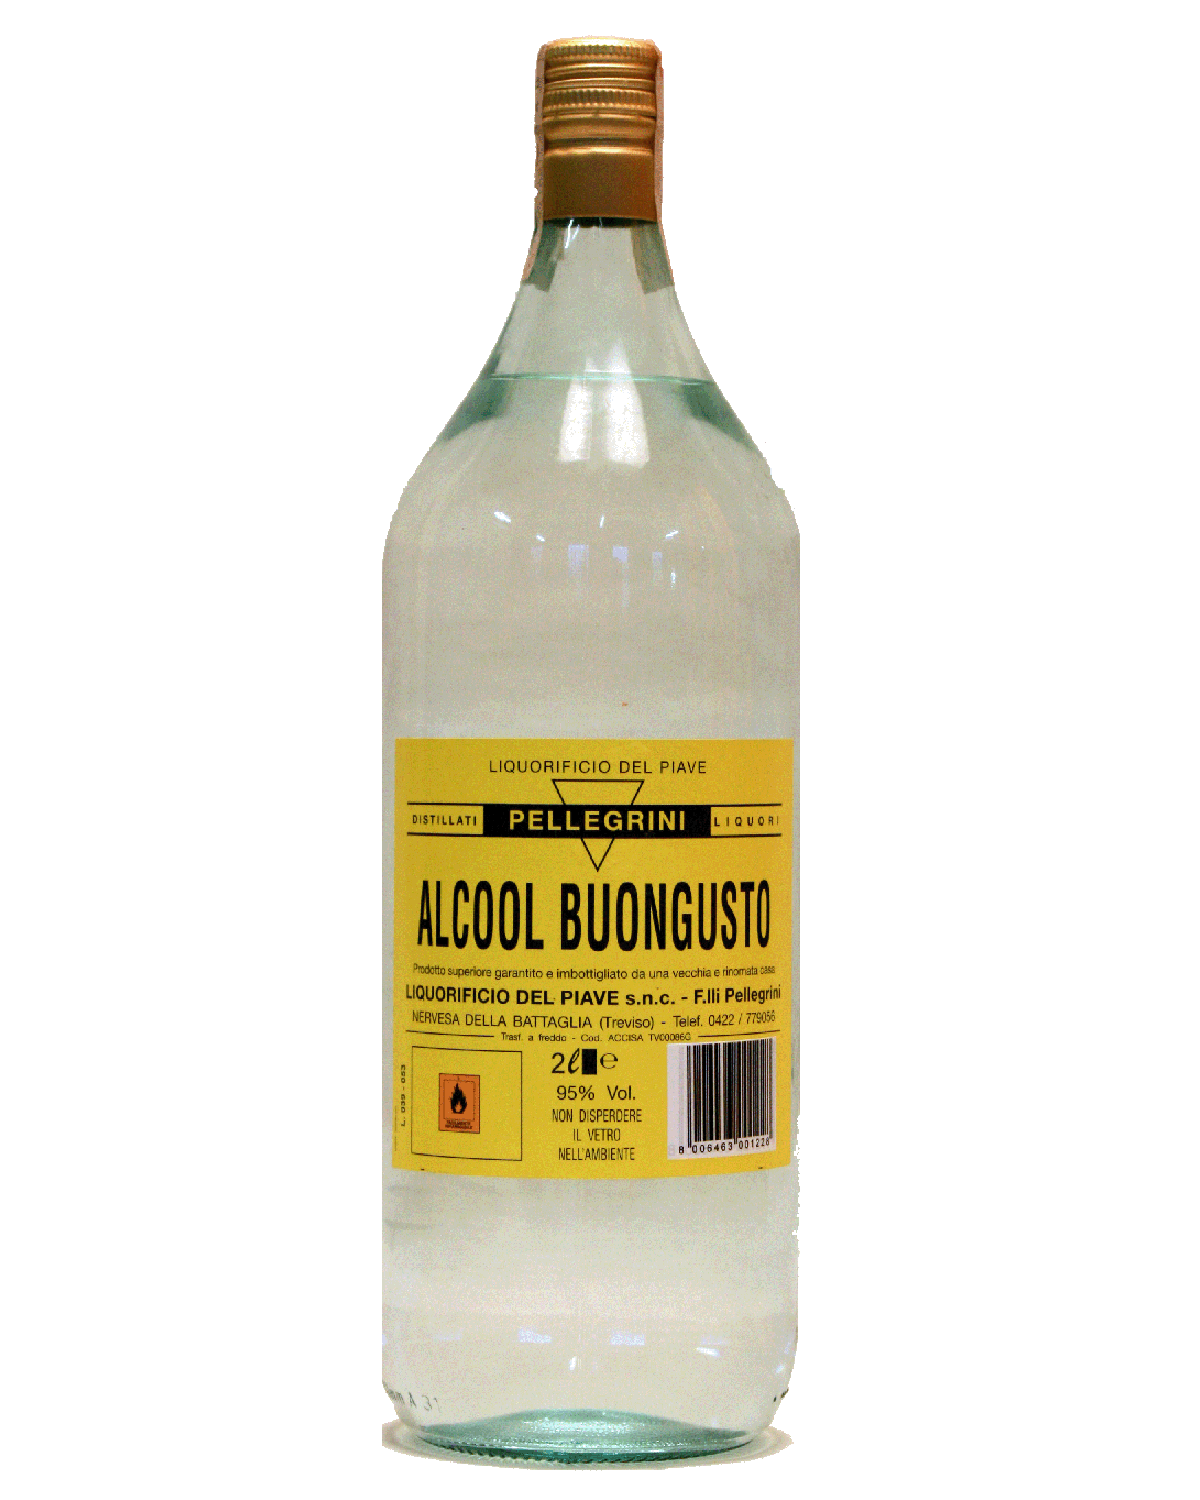 Alcool Buongusto